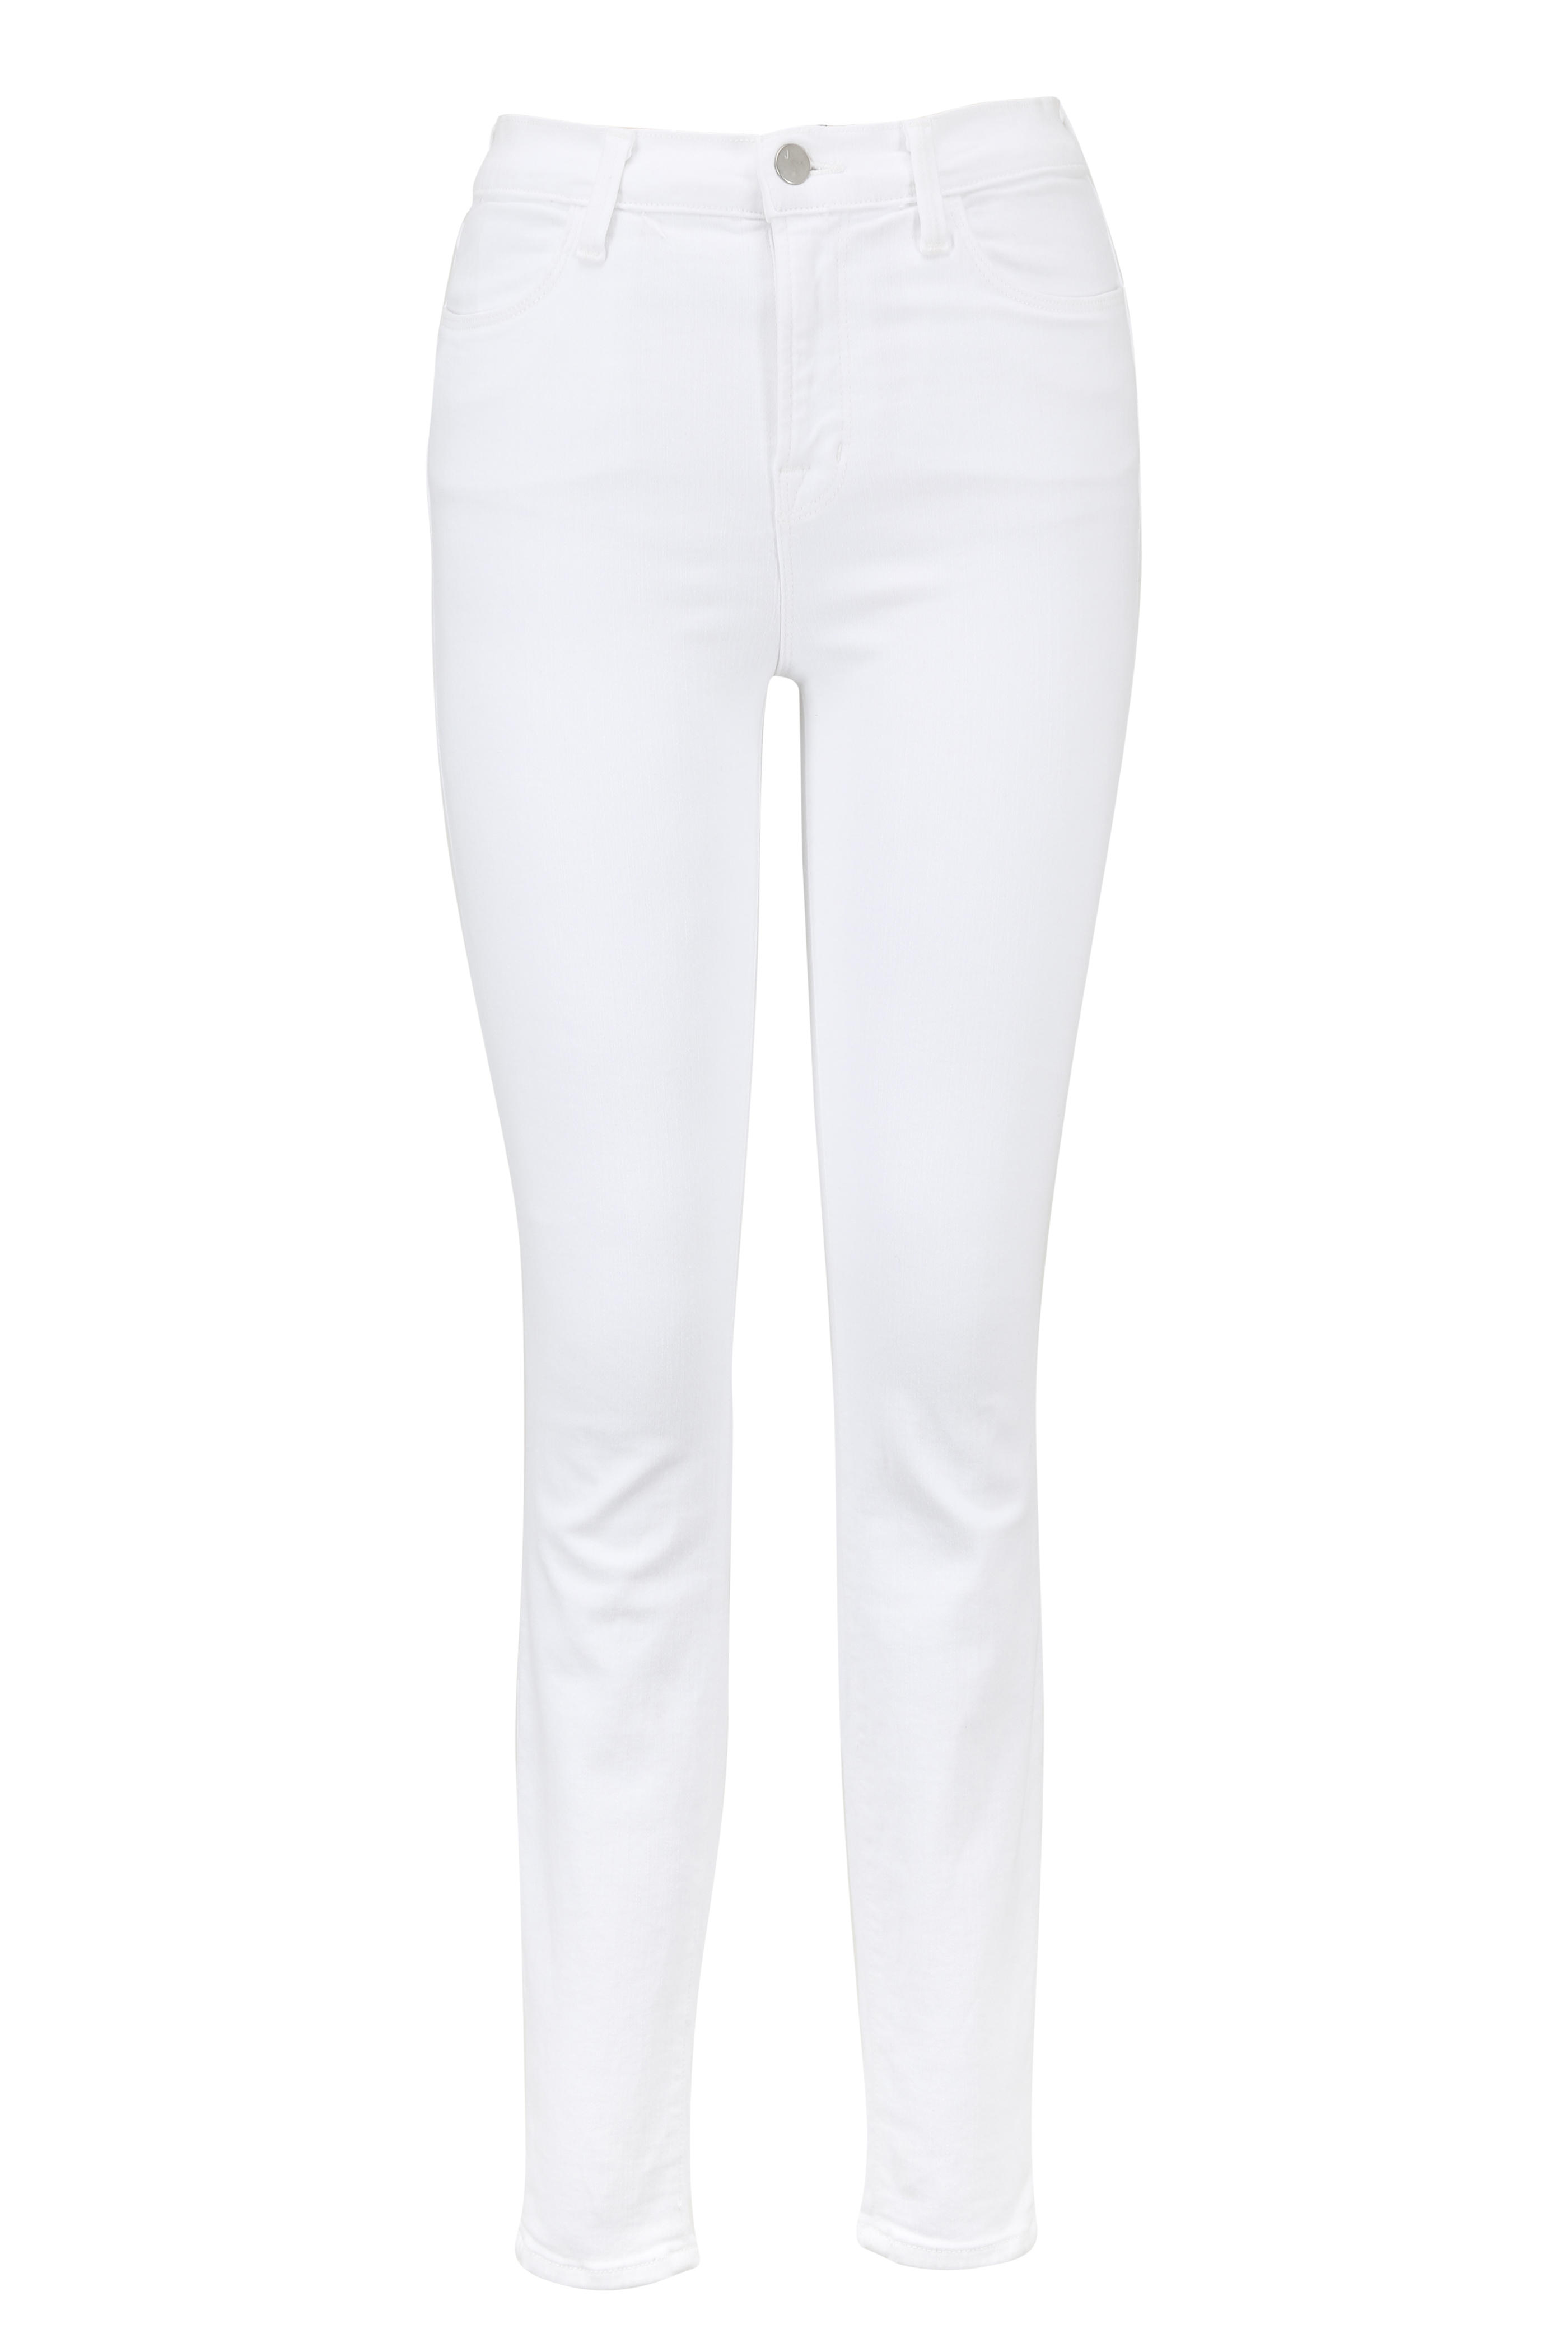 j brand maria white jeans